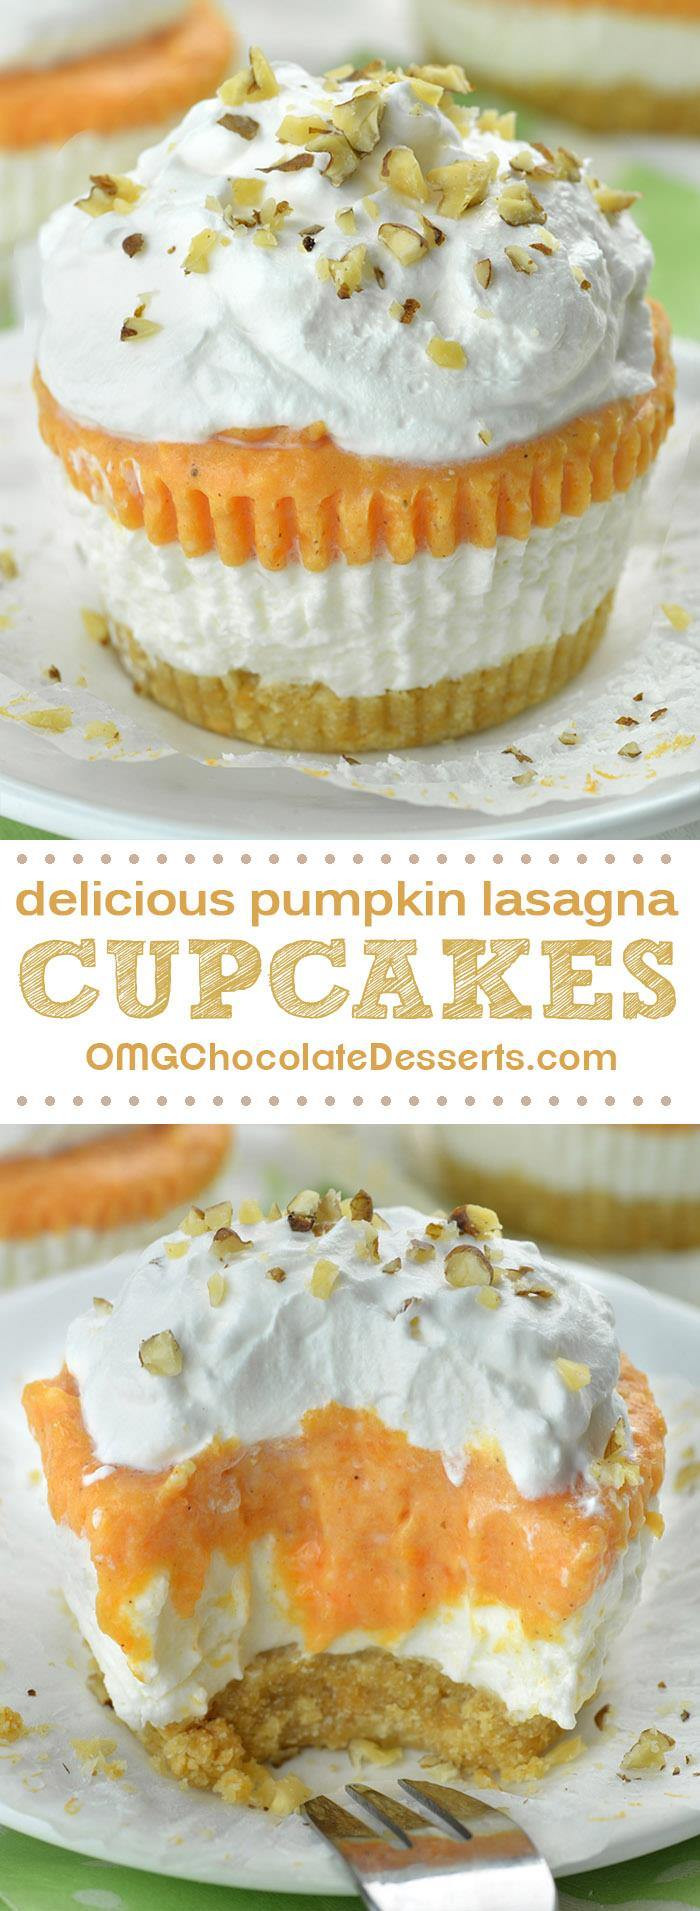 No Bake Pumpkin Desserts
 Pumpkin Lasagna Cupcakes